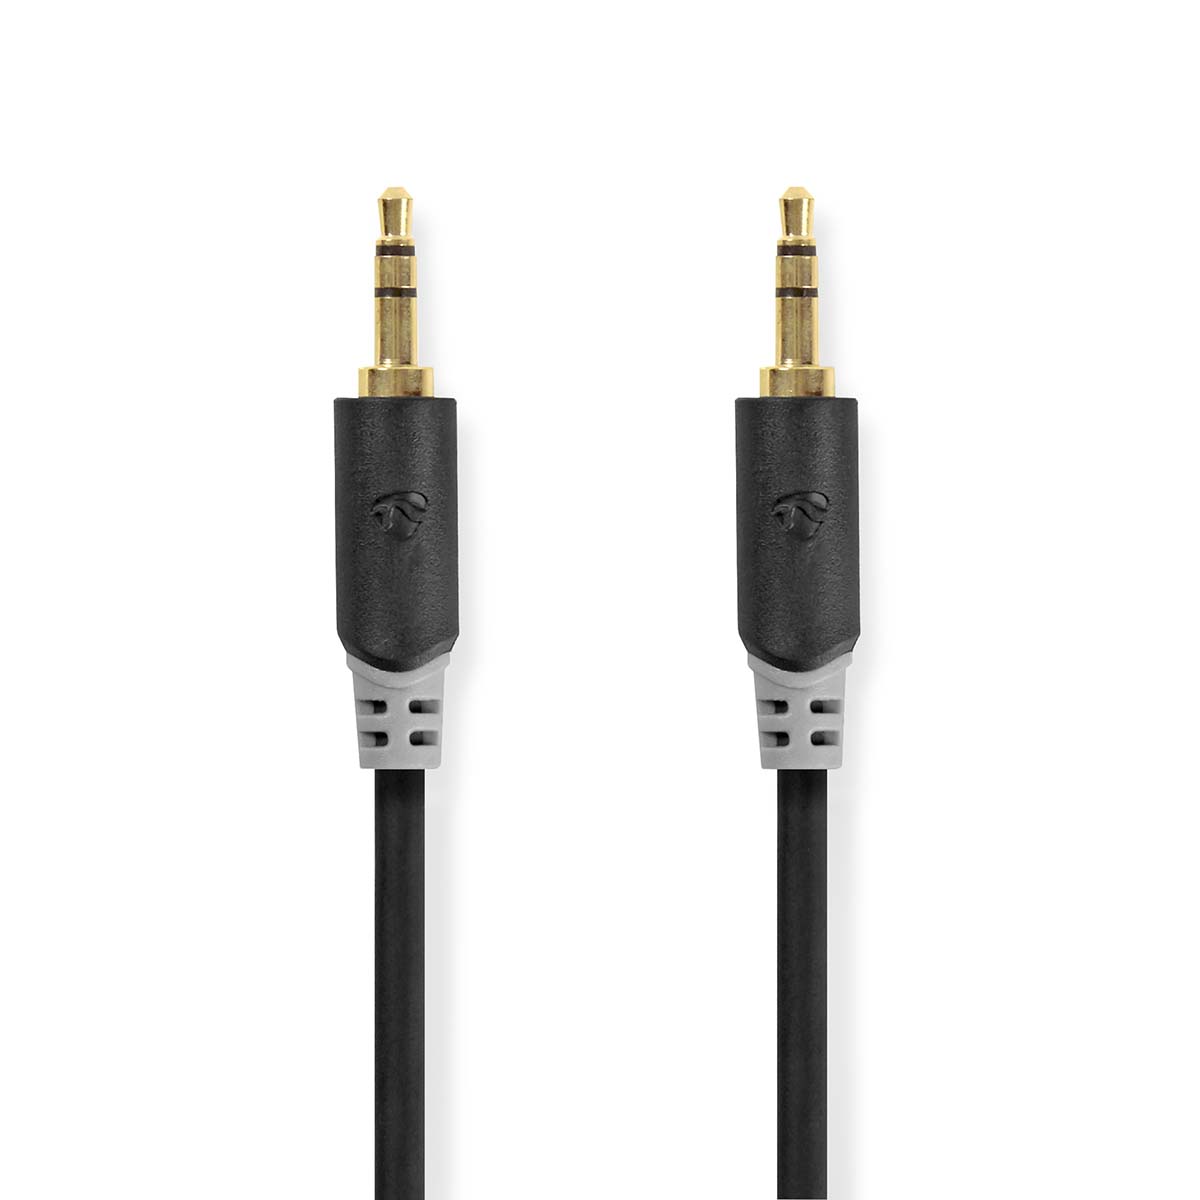 Nedis stereo audio kabel, 3,5mm konektor - 3,5mm konektor, pozlacené, 1m